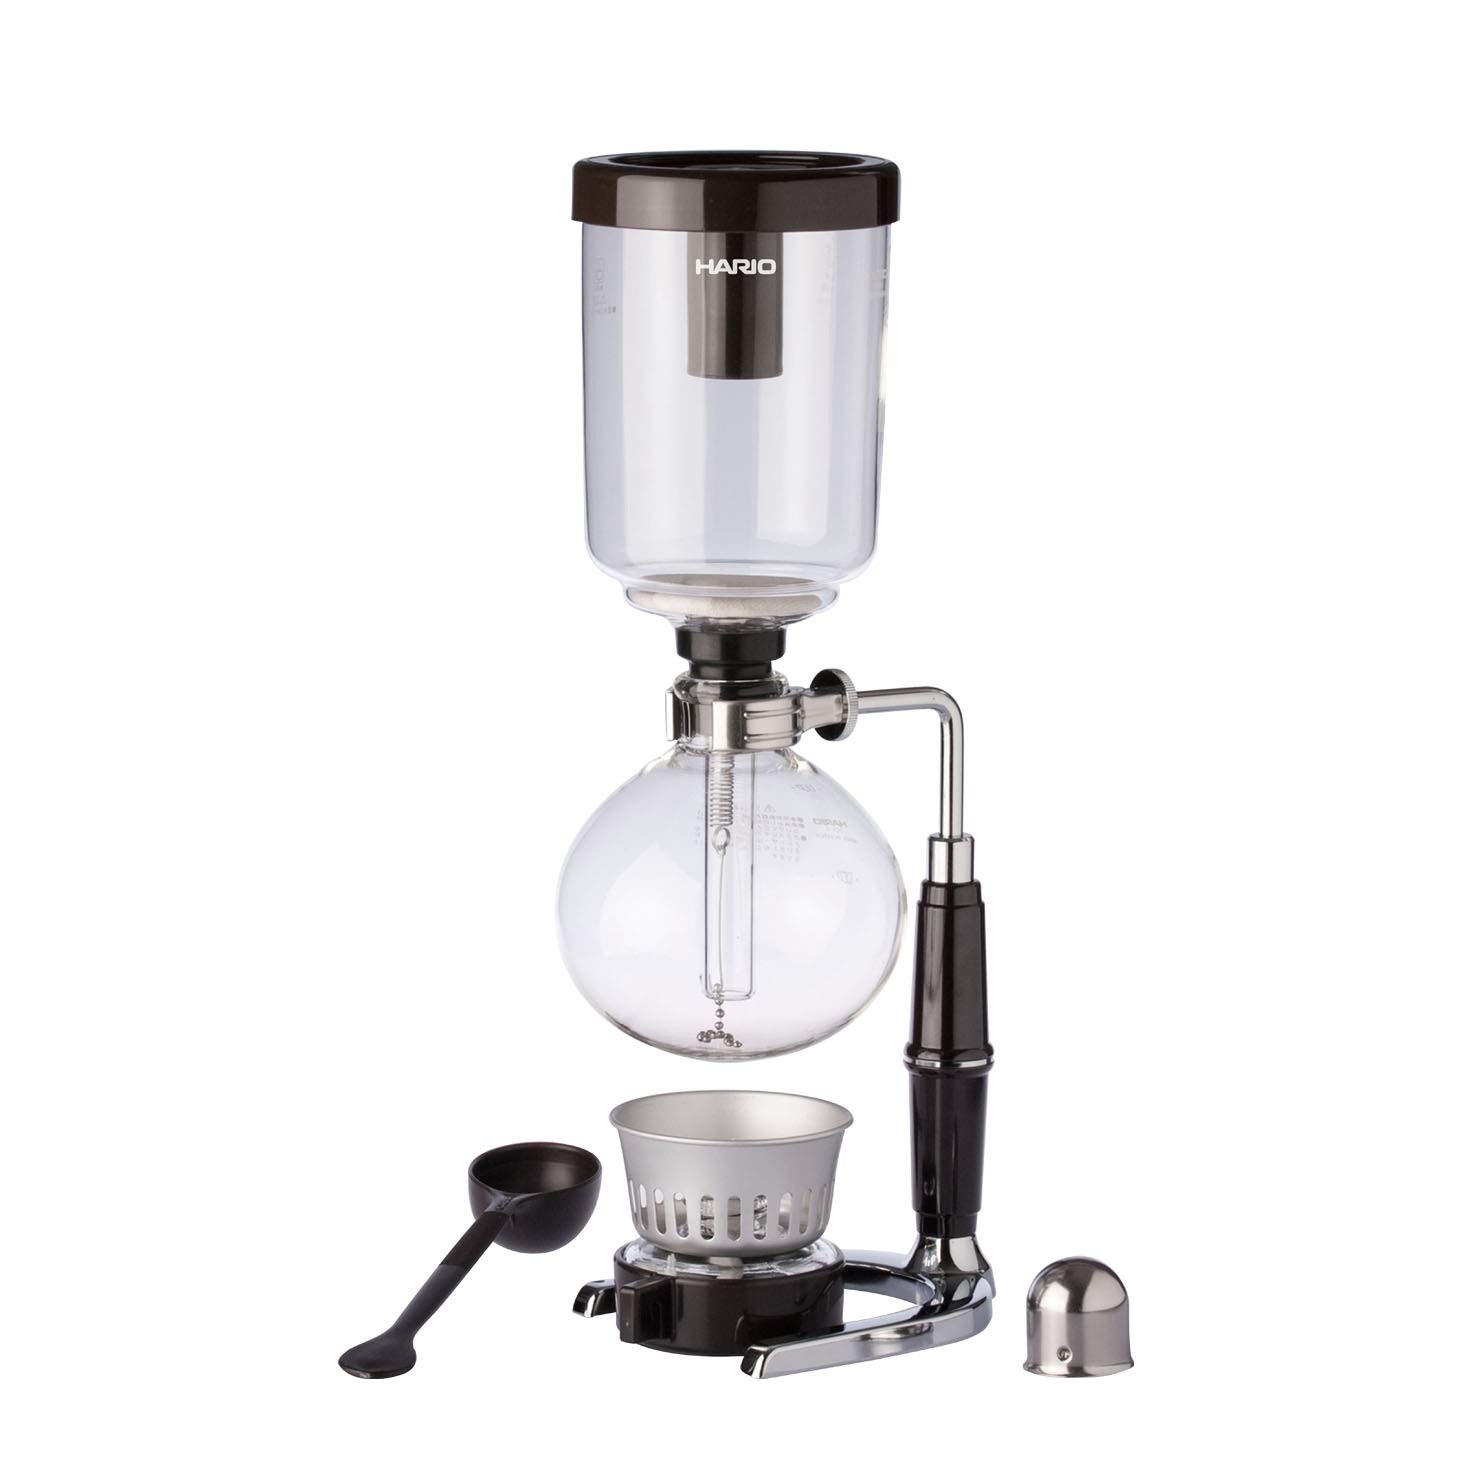 Hario "Technica" Glass Syphon Coffee Maker, 600ml 5-Cup Std